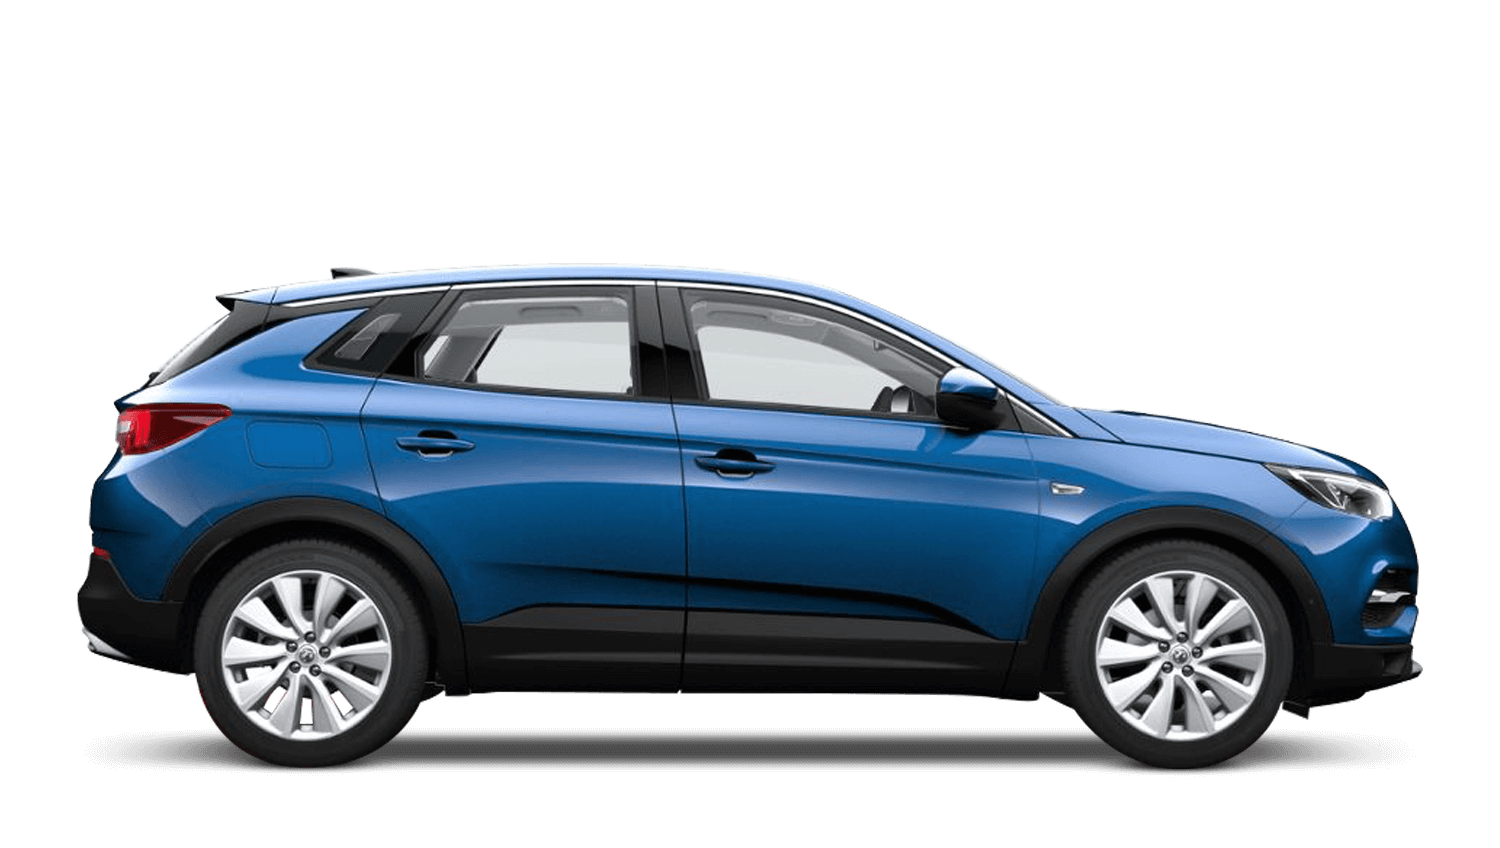 Afbeelding van TX618P, blauwe Opel Grandland X mpv